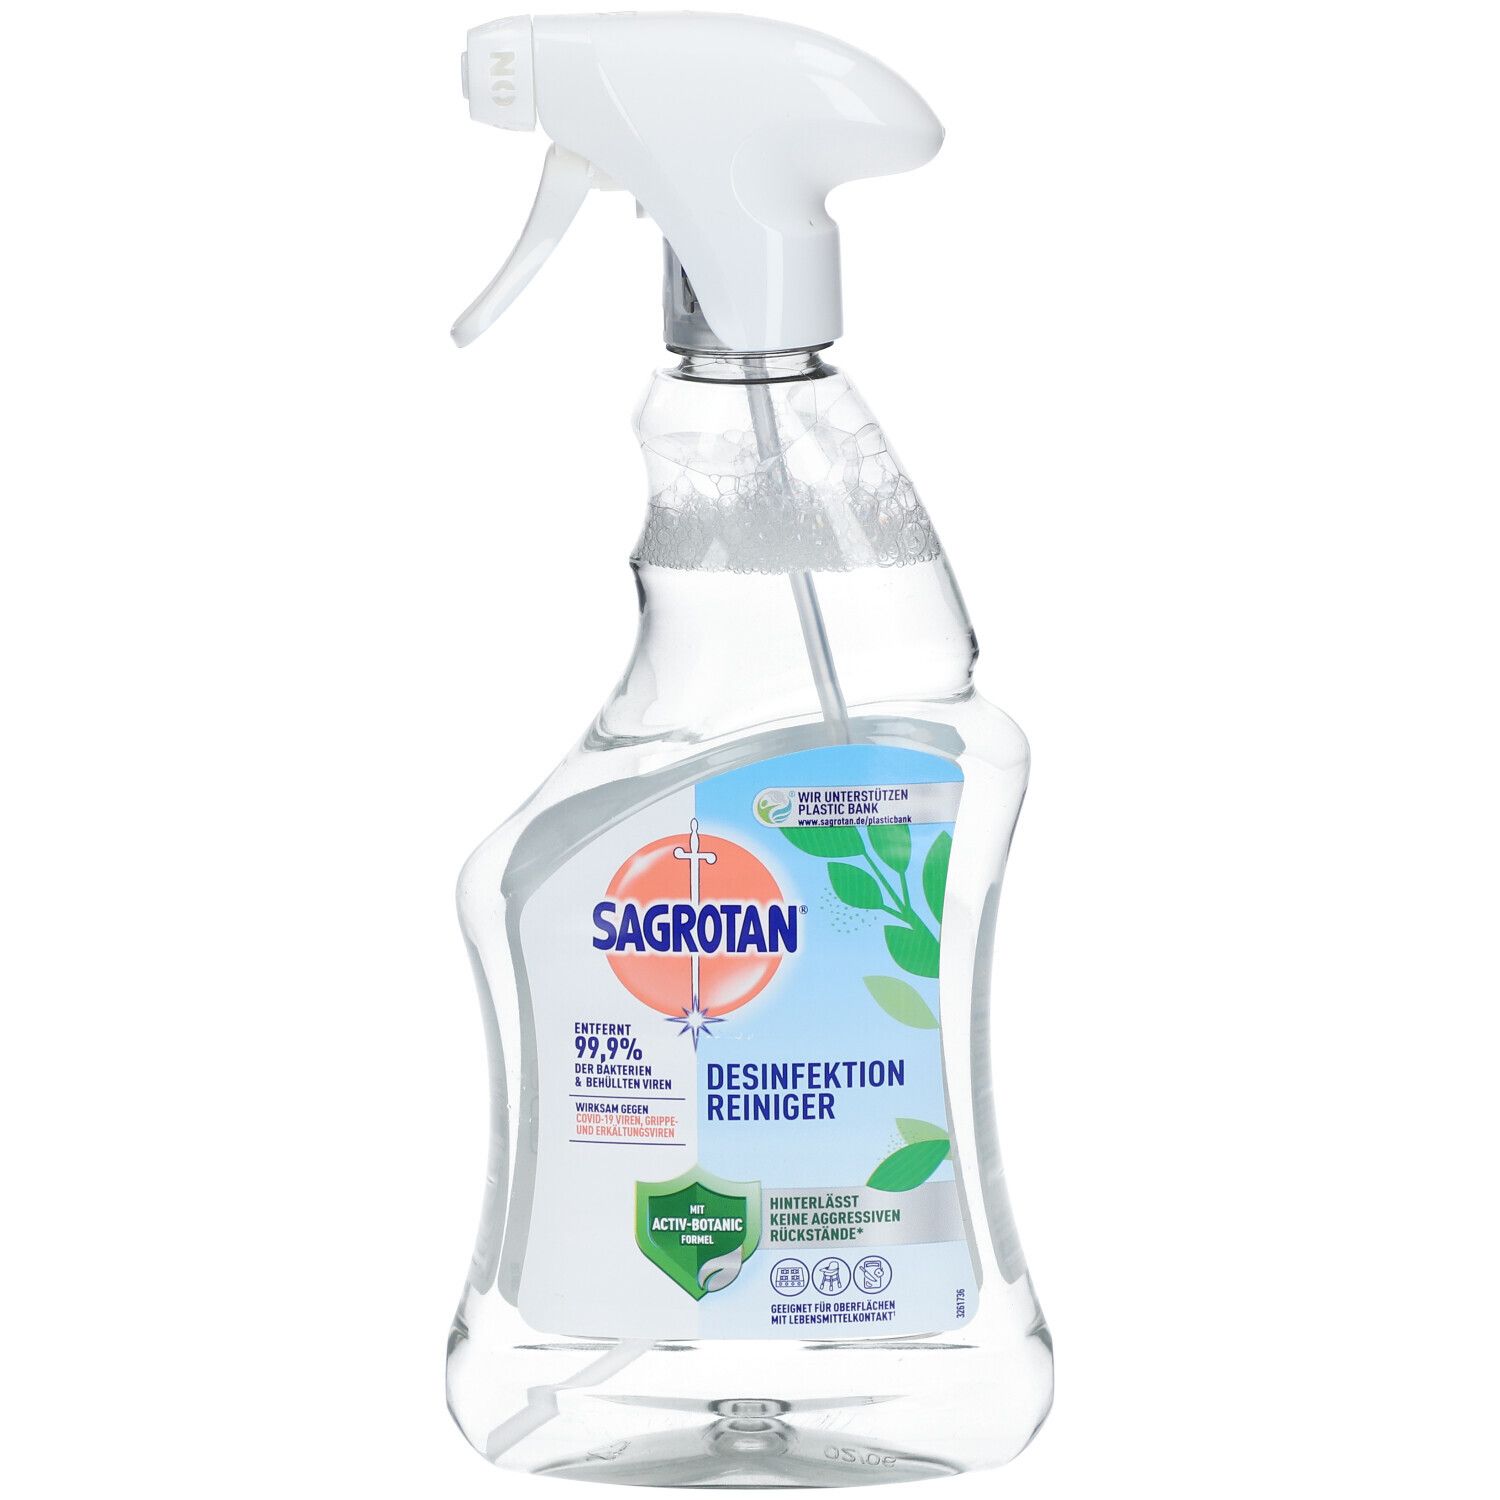 Sagrotan® disinfection cleaner